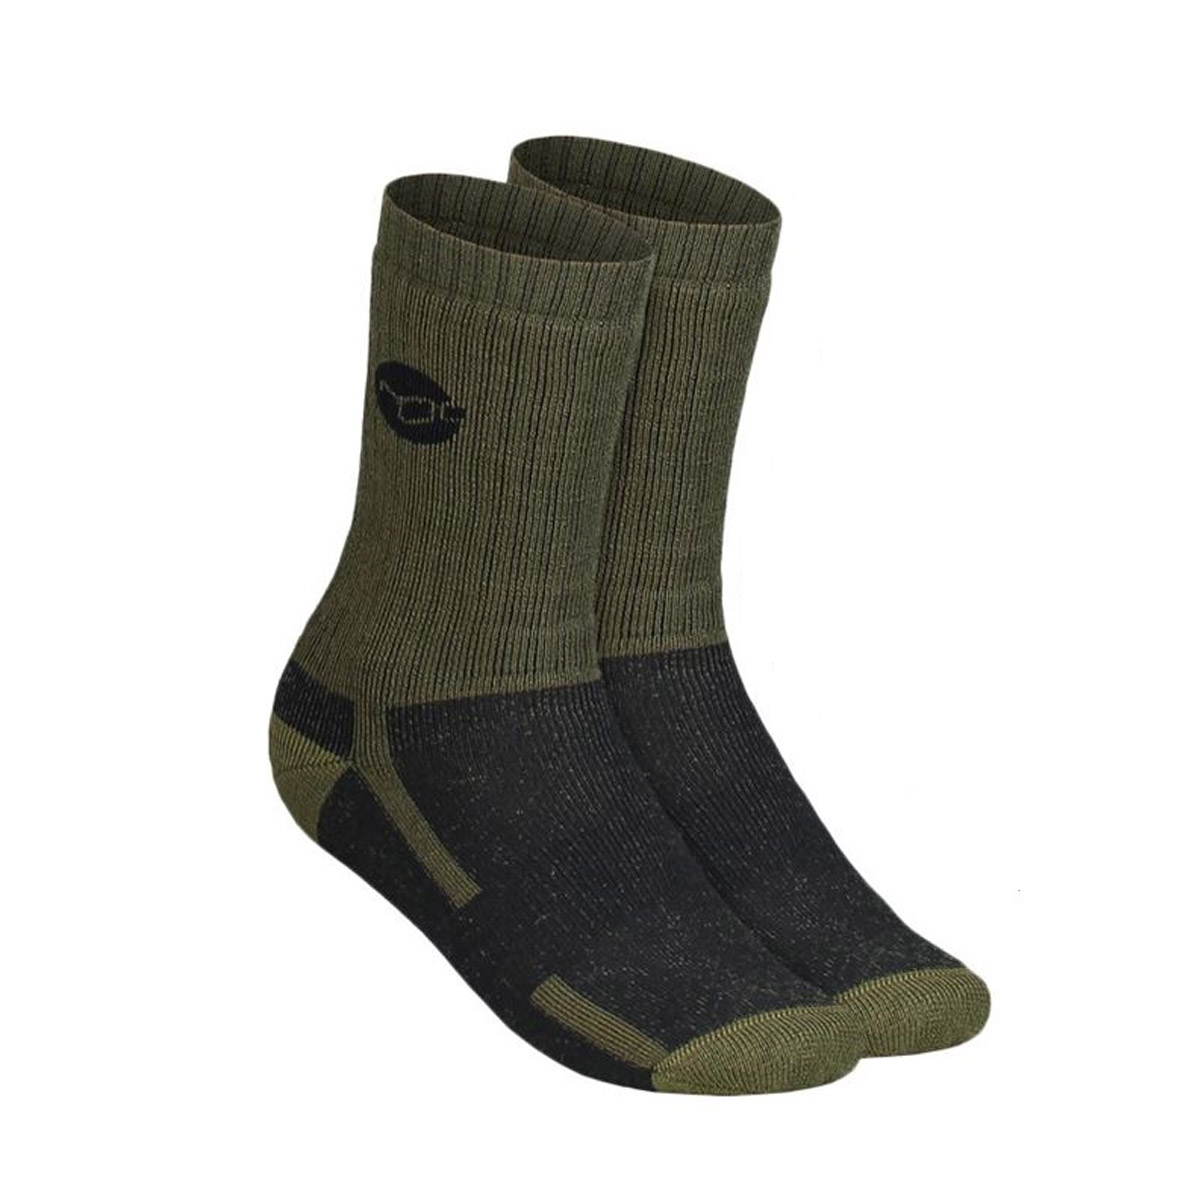 Korda merino wool sock olive -  39-42 -  43-46